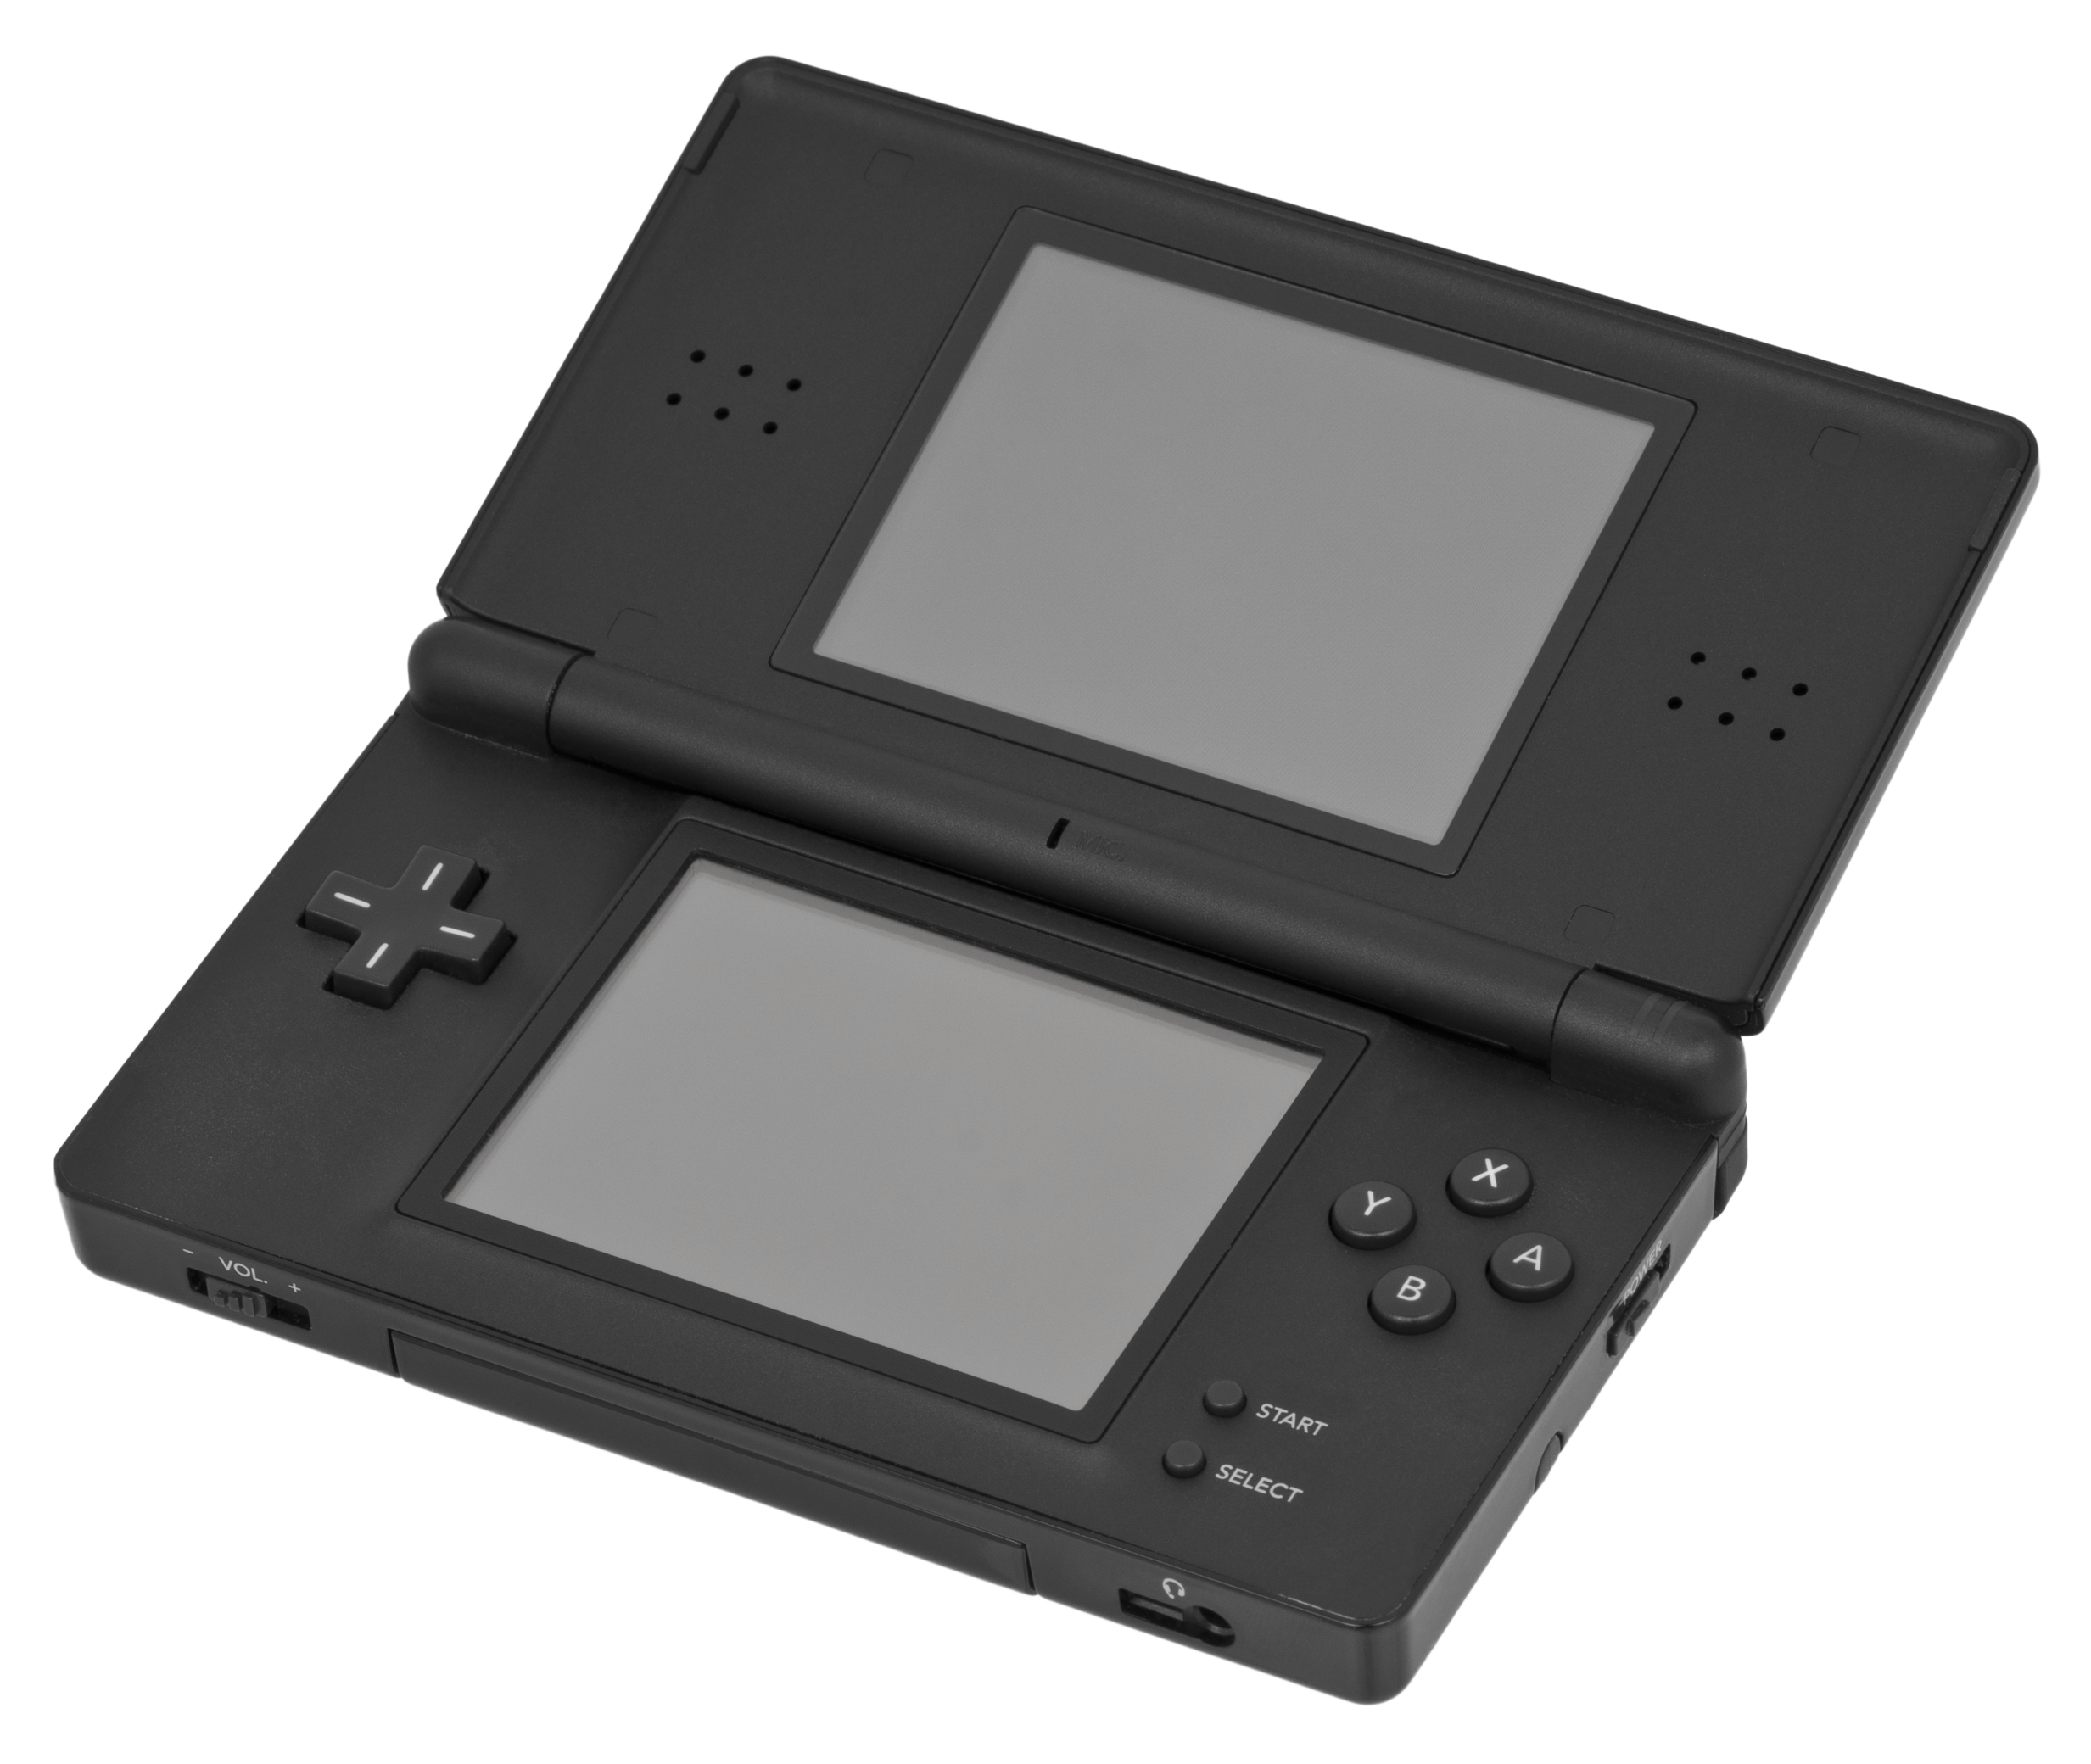 File:Nintendo-DS-Lite-Black-Open.png - Commons